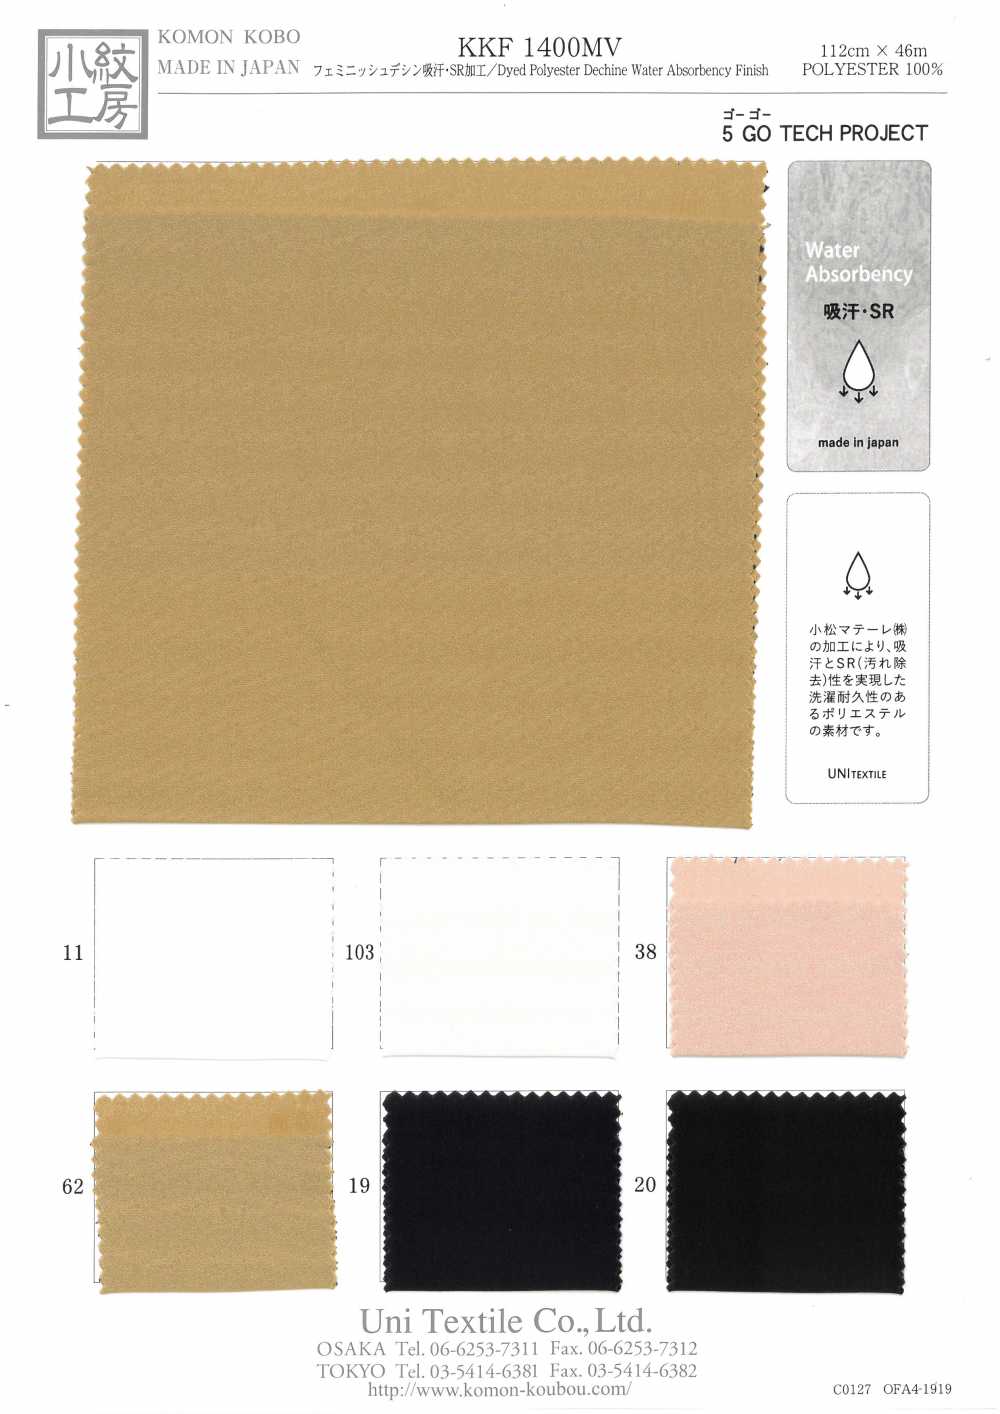 KKF1400MV Feminine Decin-Schweißabsorption / SR-Verarbeitung[Textilgewebe] Uni Textile